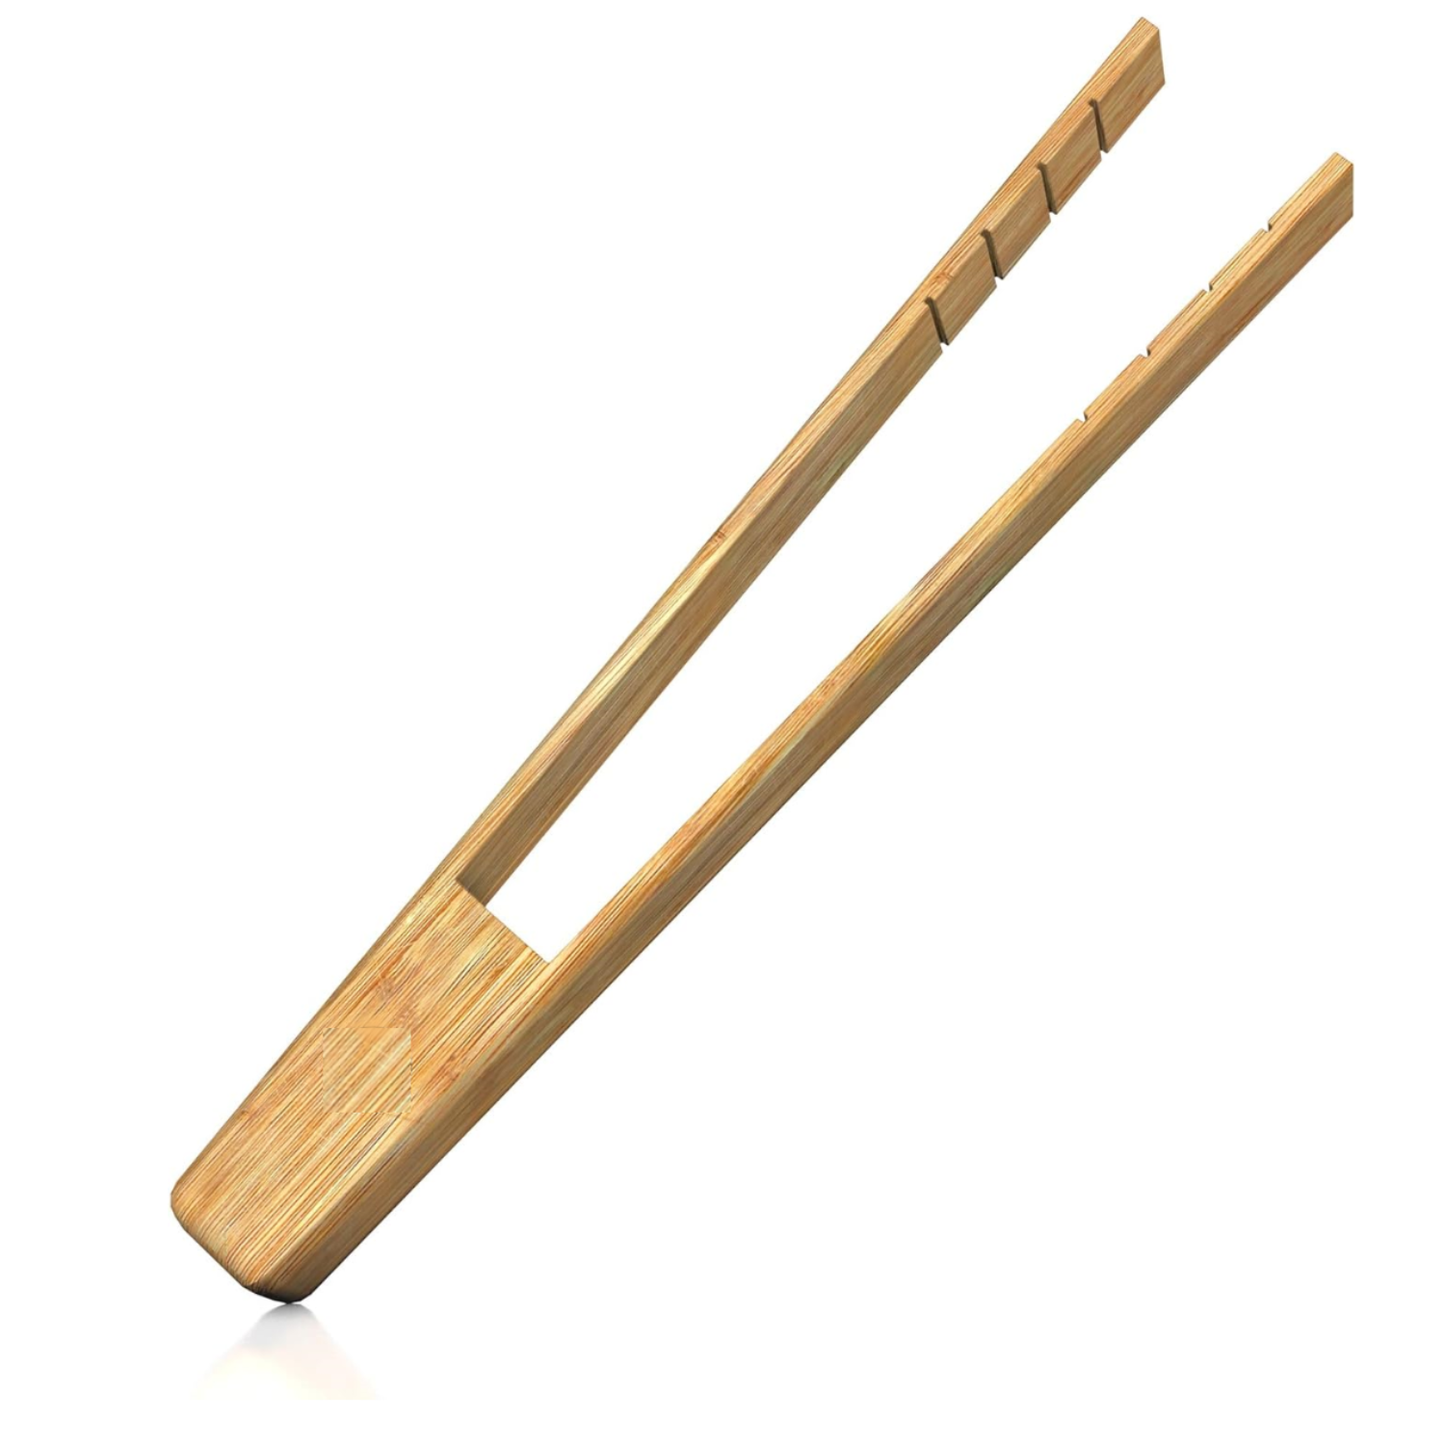 12" Bamboo Tongs (Set of 3)